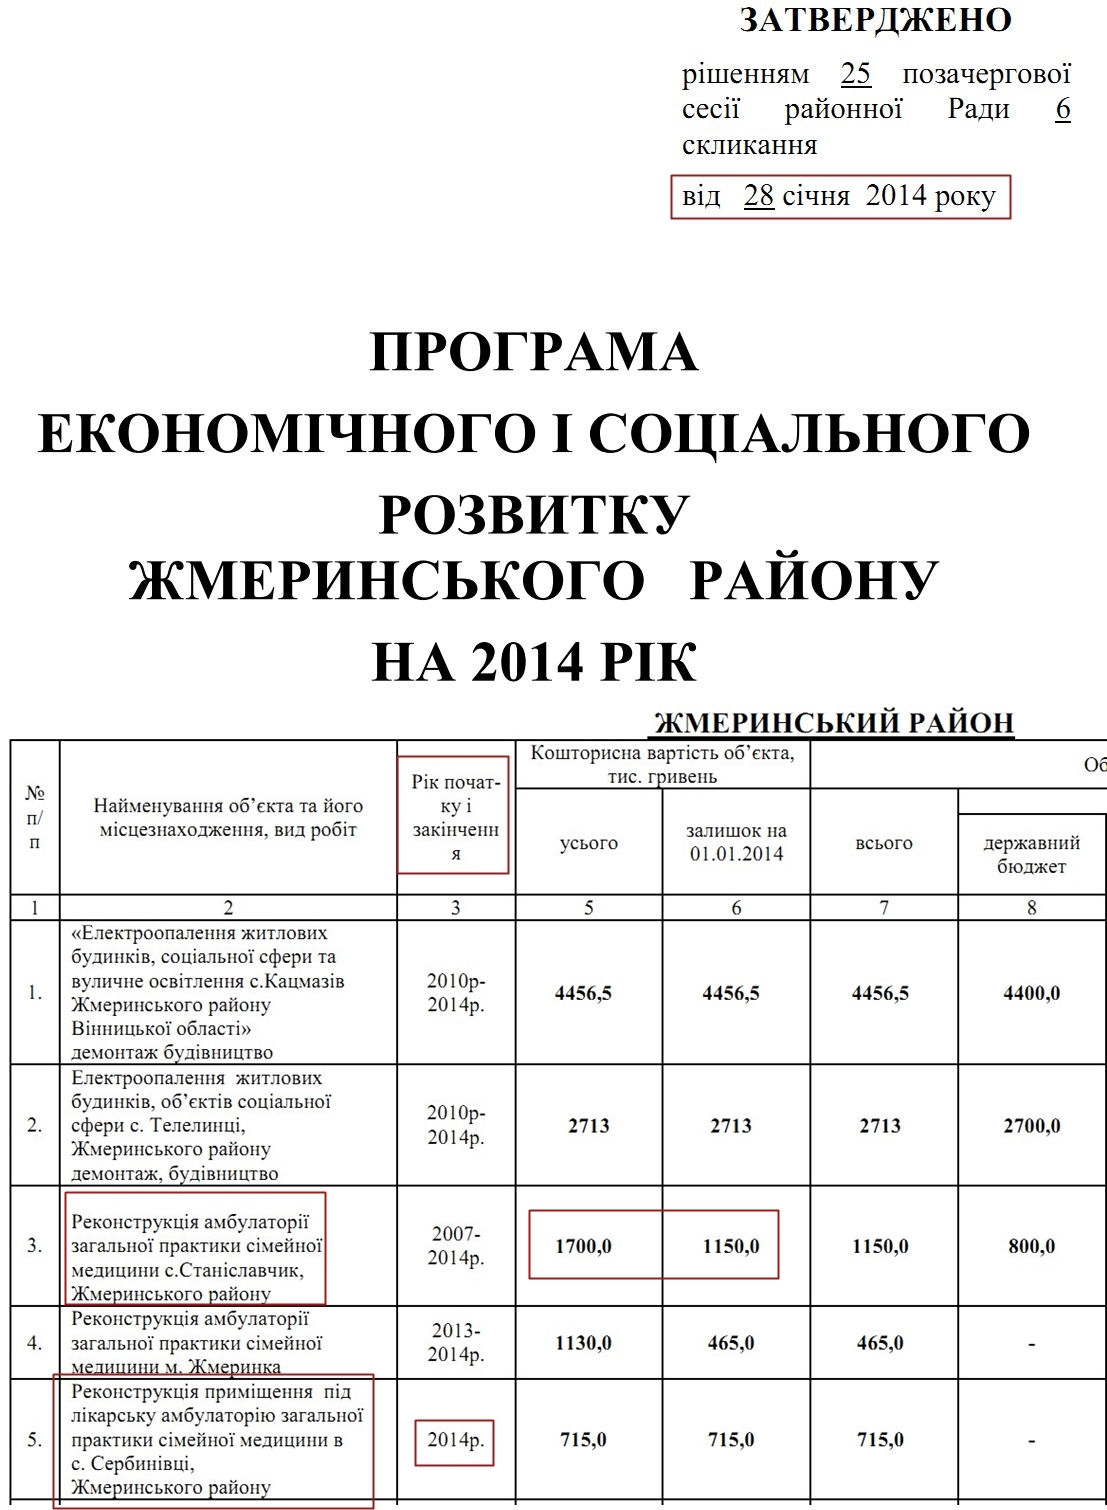 http://zhmrada.gov.ua/docs/25%20sesiya/25601.rar